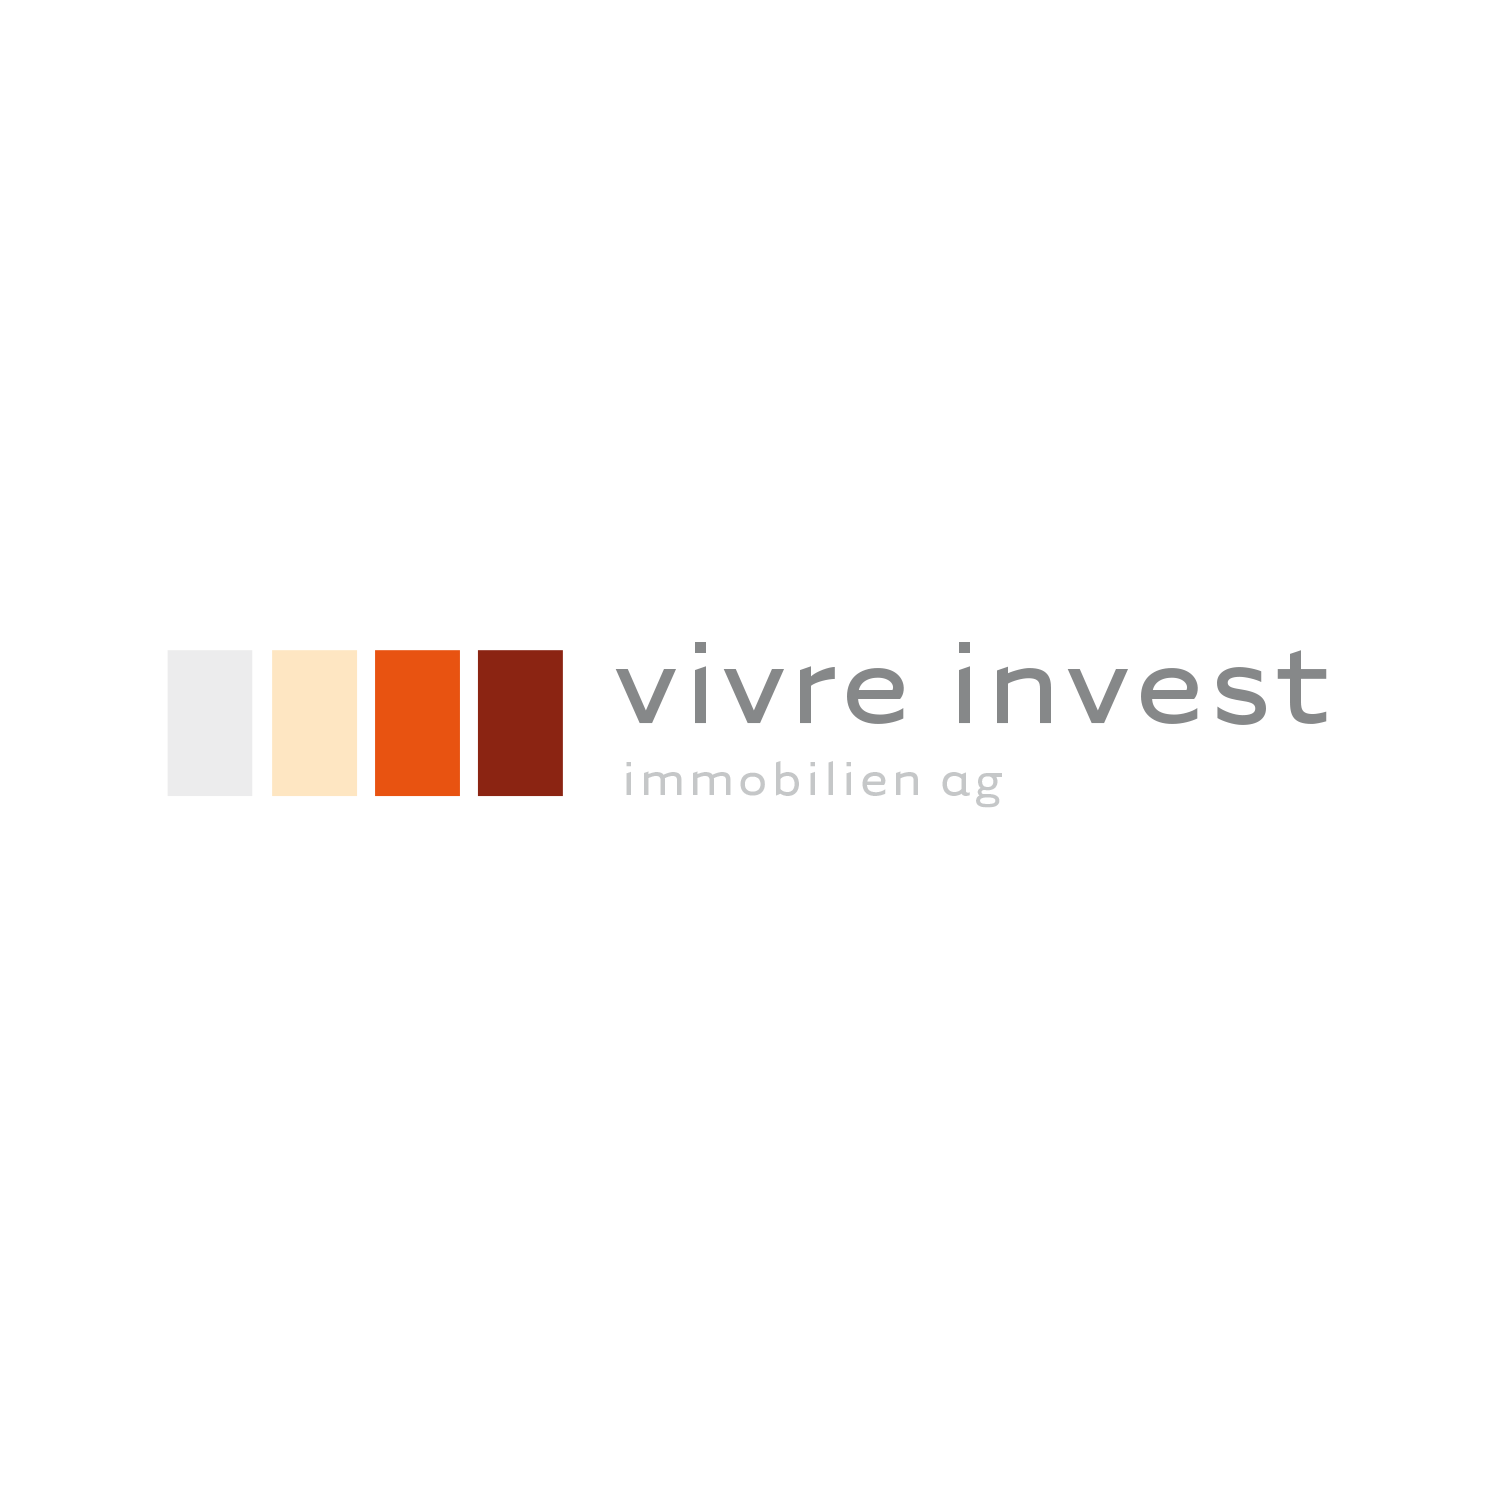 vivre-invest_logo